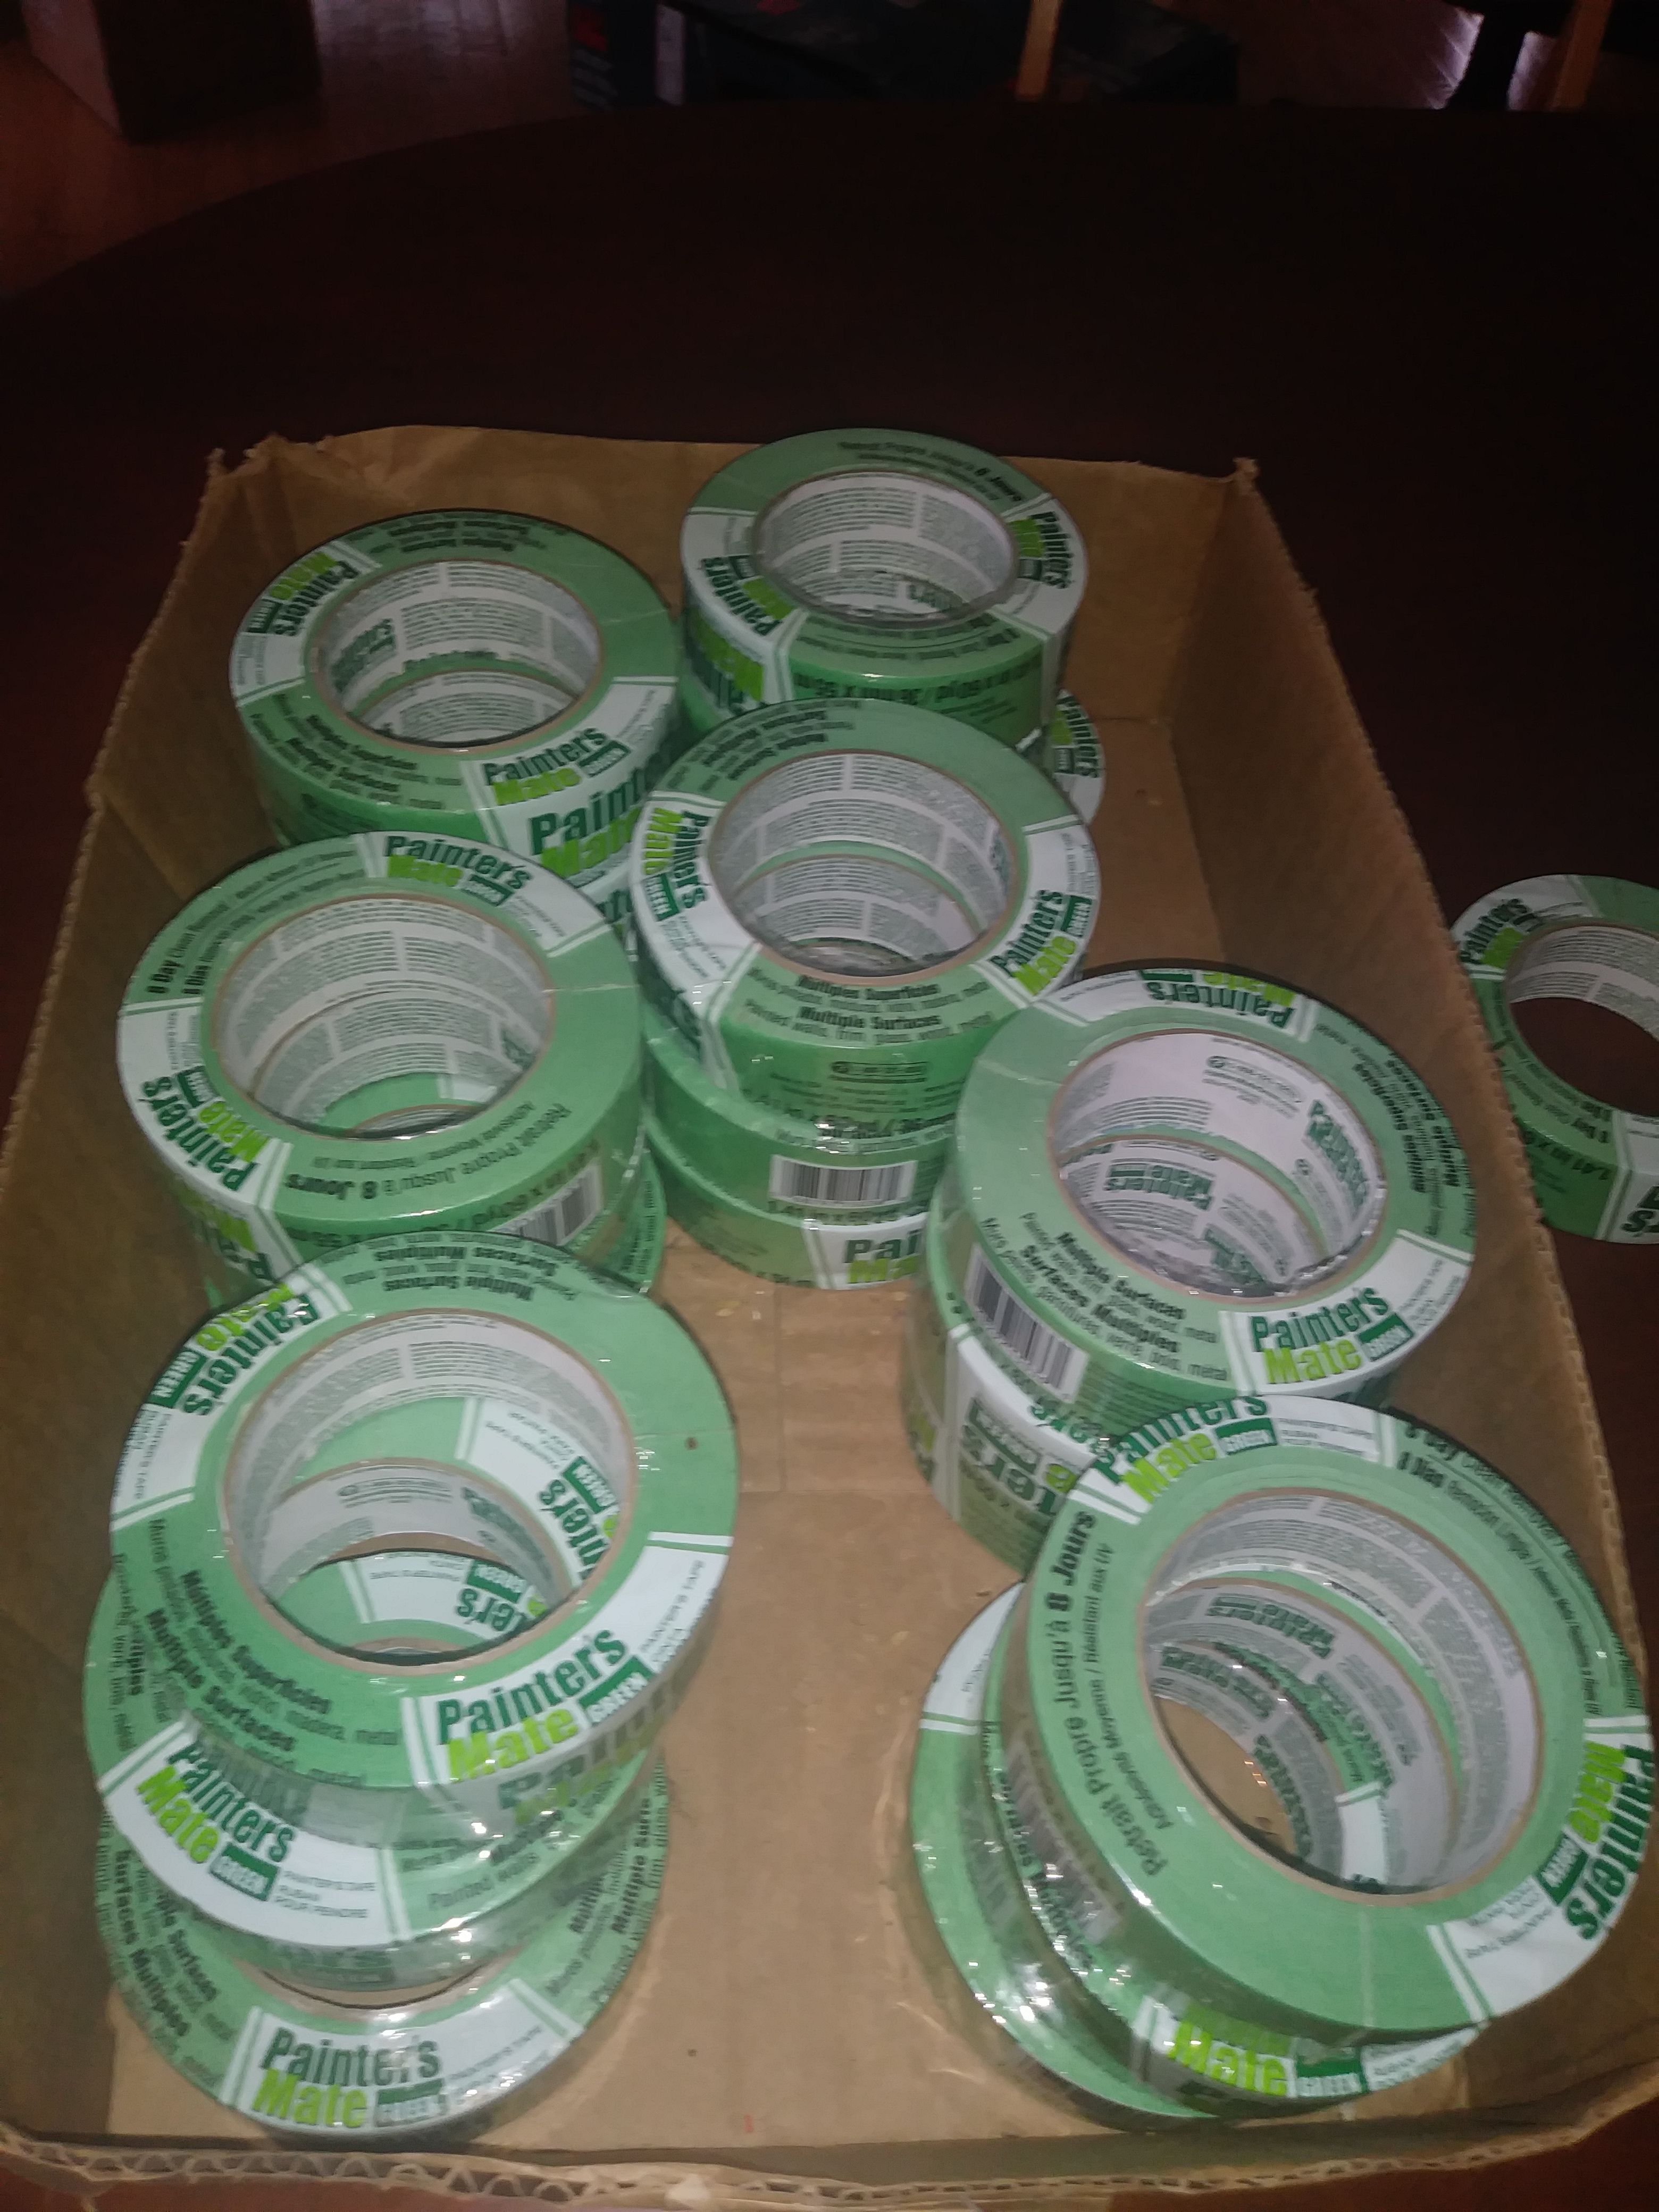 Painters Mate Green Masking Tape